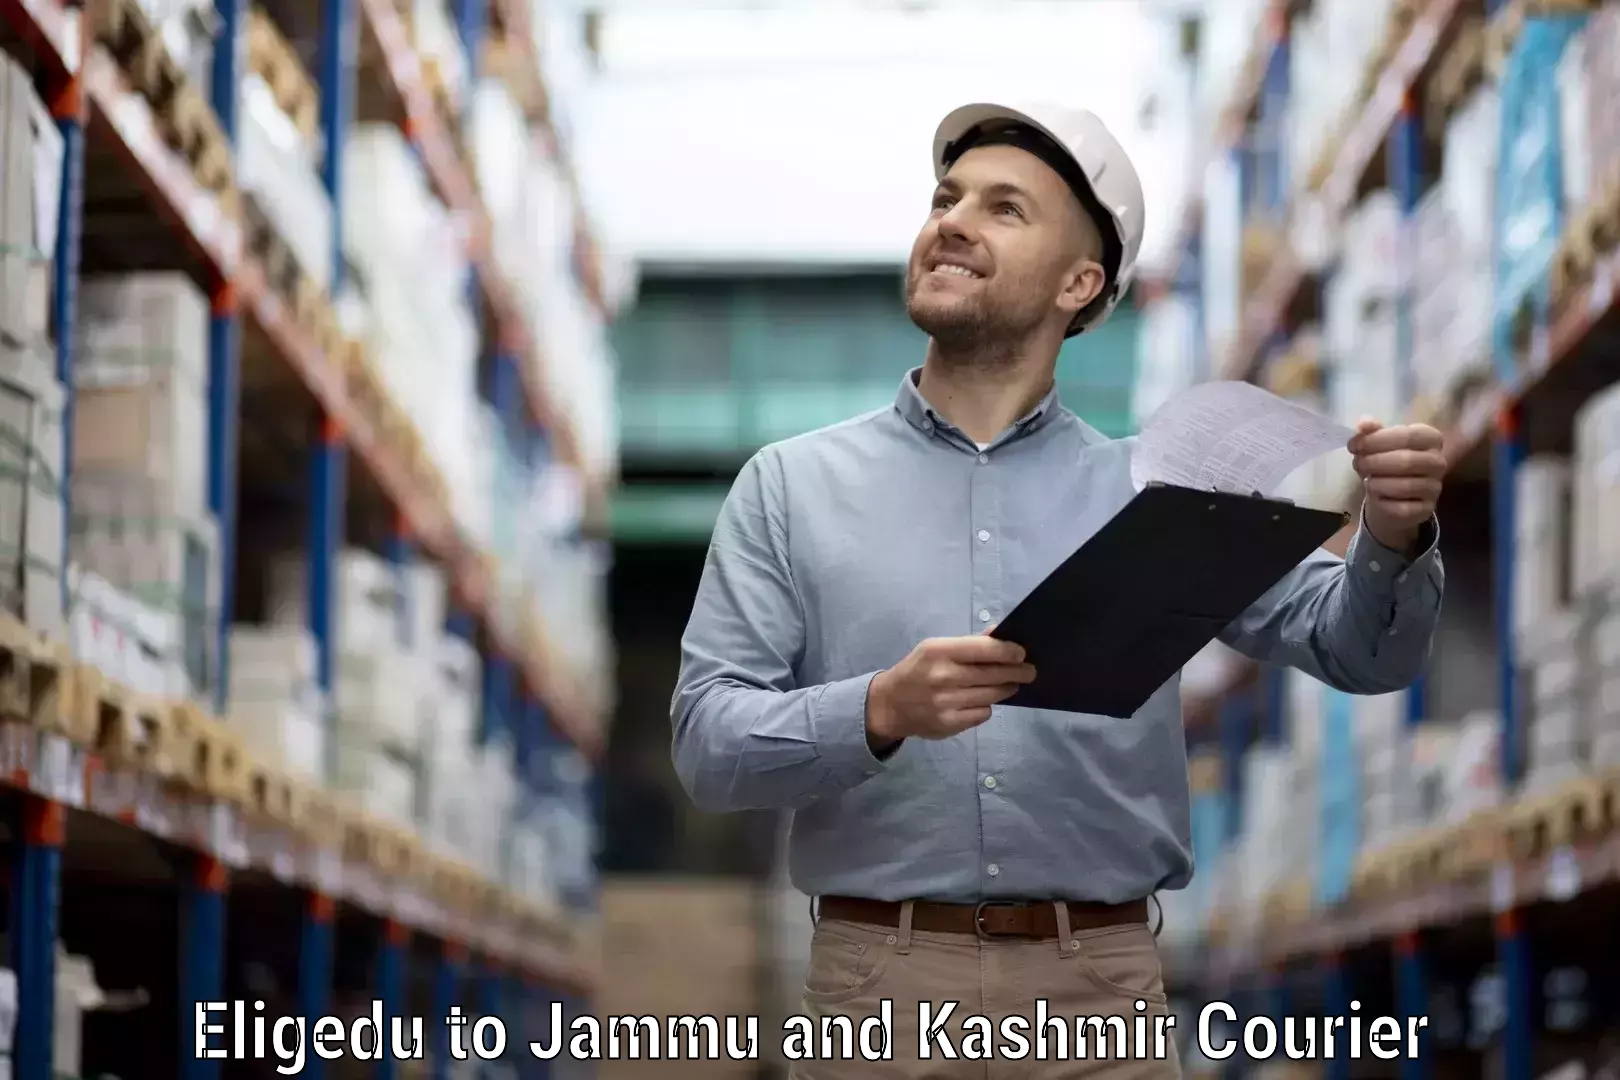 Cargo courier service Eligedu to Jammu and Kashmir